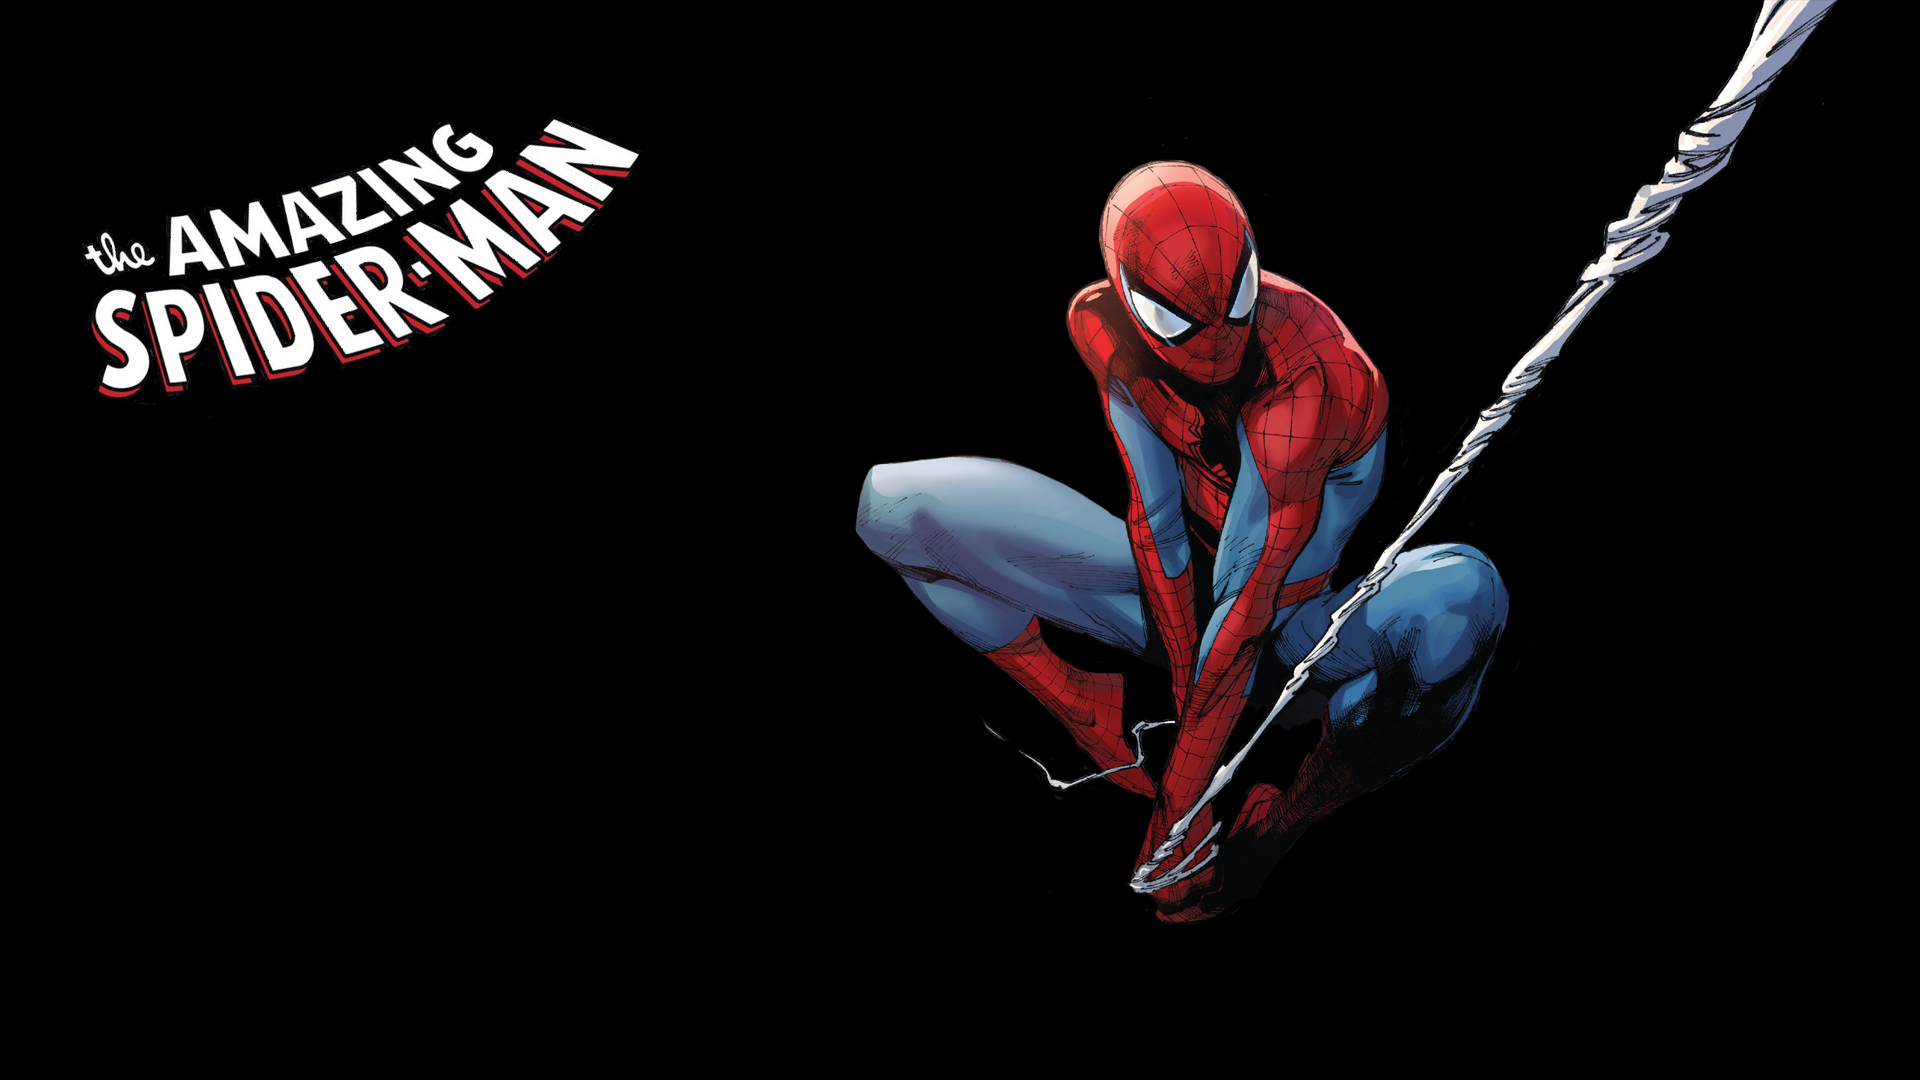 spiderman wallpaper hd,spider man,fictional character,human body,superhero,recreation